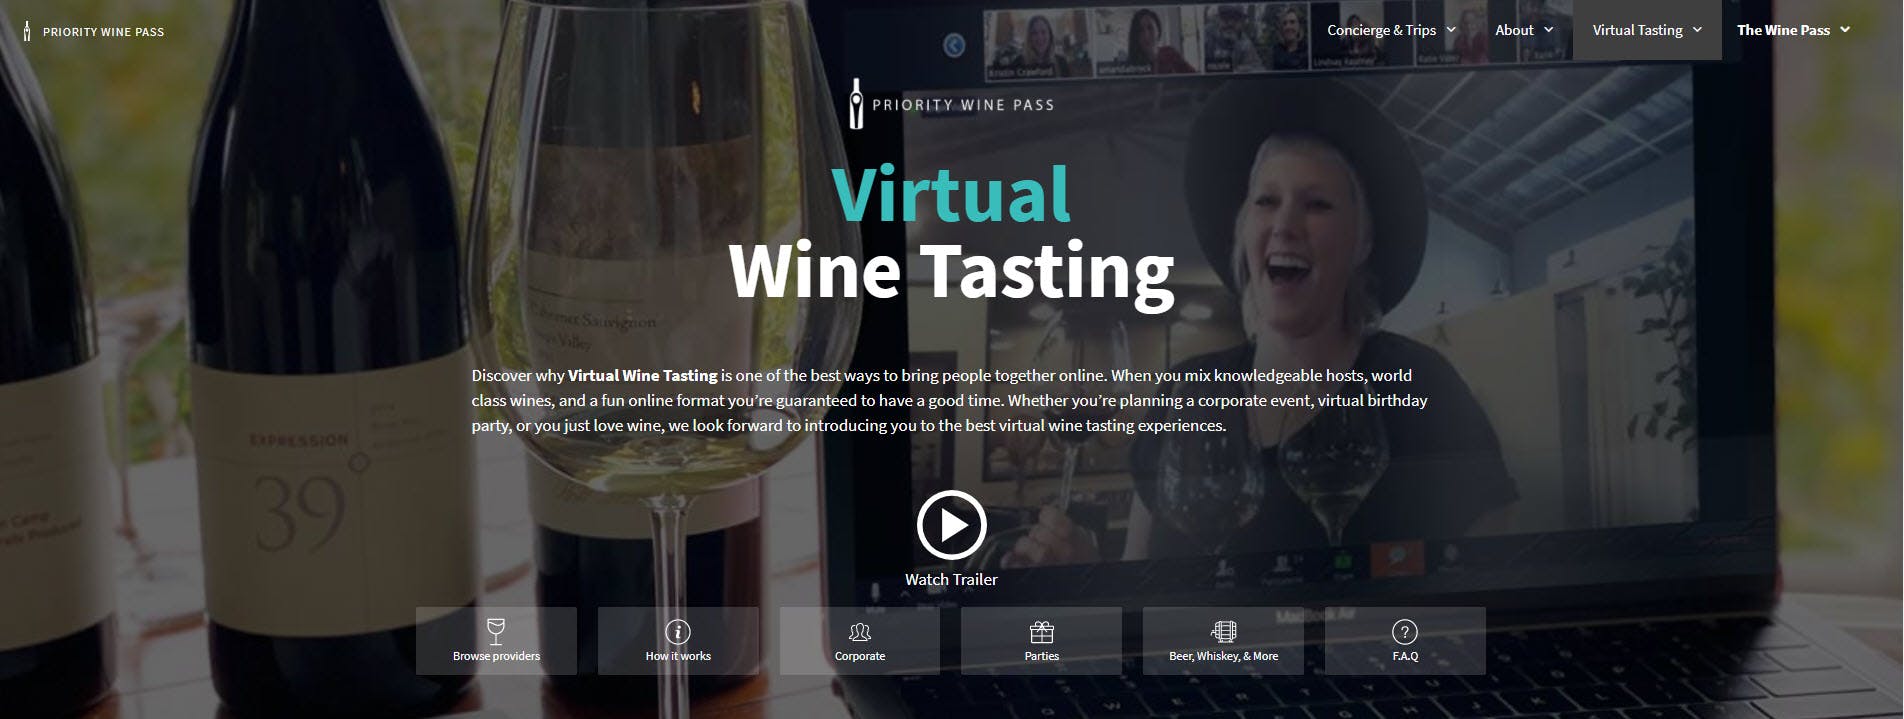 Priority Wine Pass website screenshot.